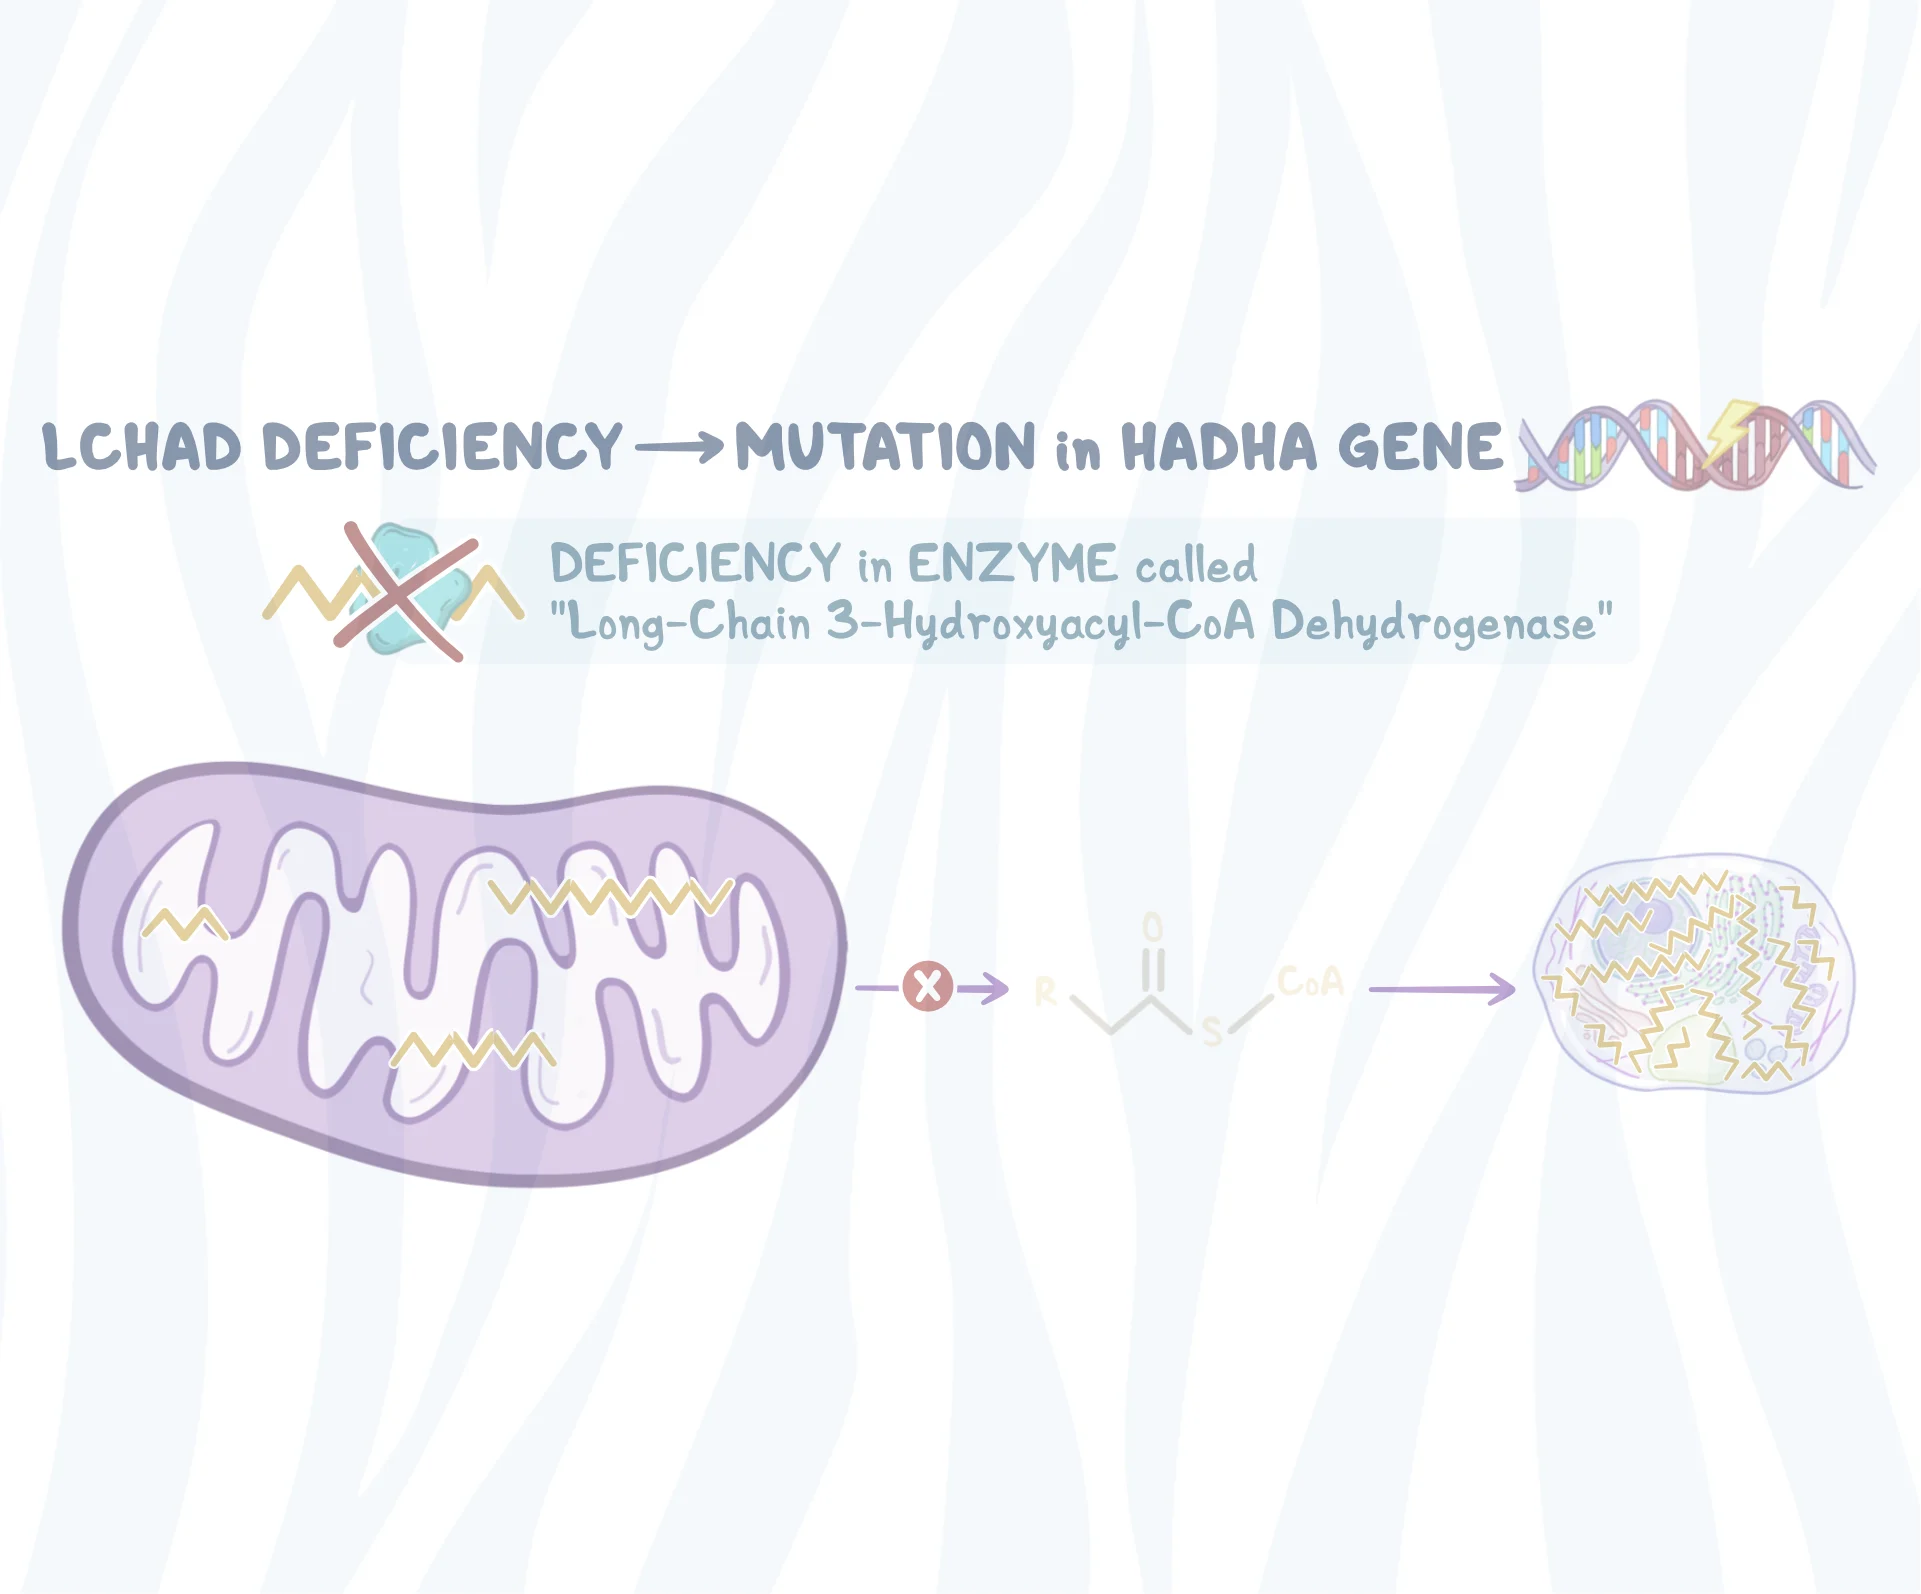 zebra_Long-Chain 3-Hydroxyacyl-CoA Dehydrogenase Deficiency video poster image